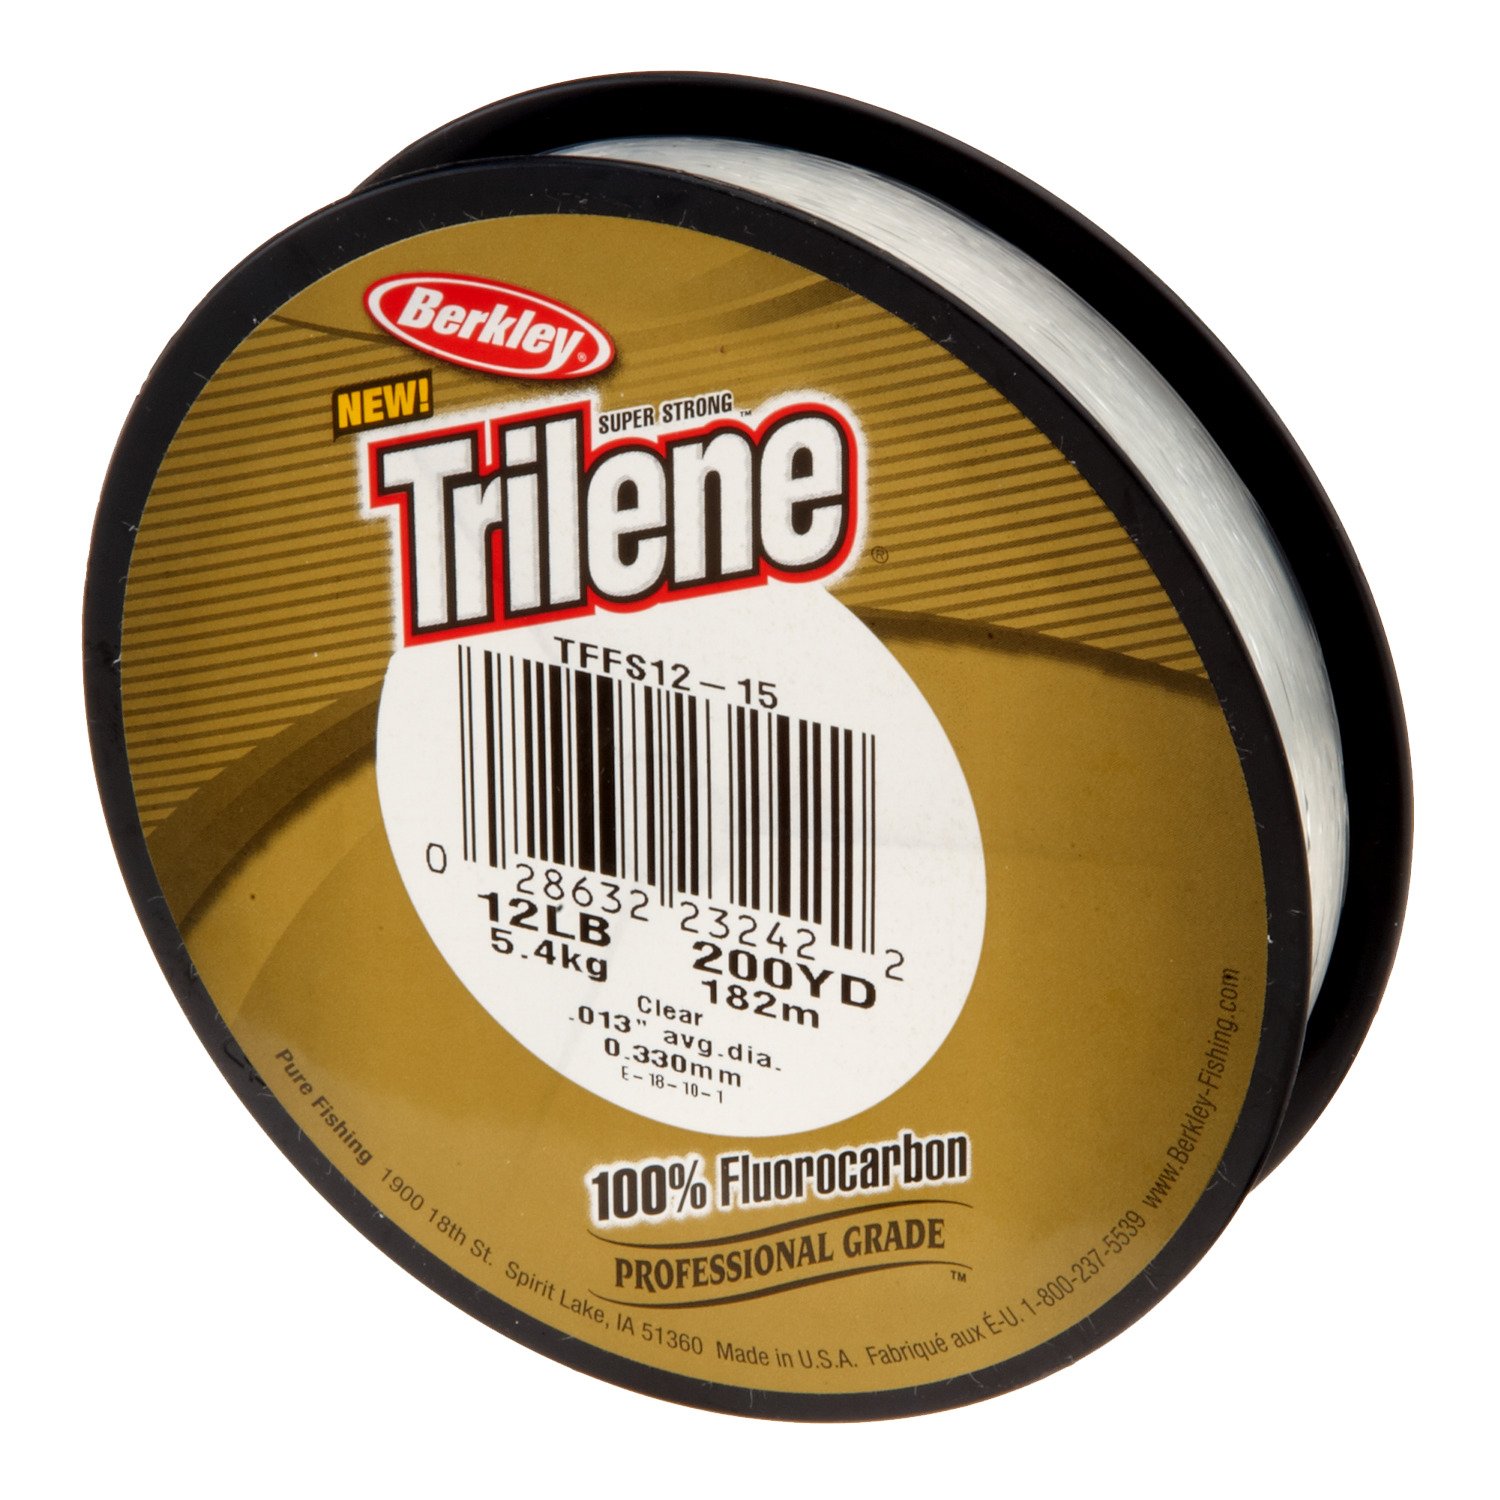 Berkley Trilene 100% Fluorocarbon Professional Grade 200 Yards